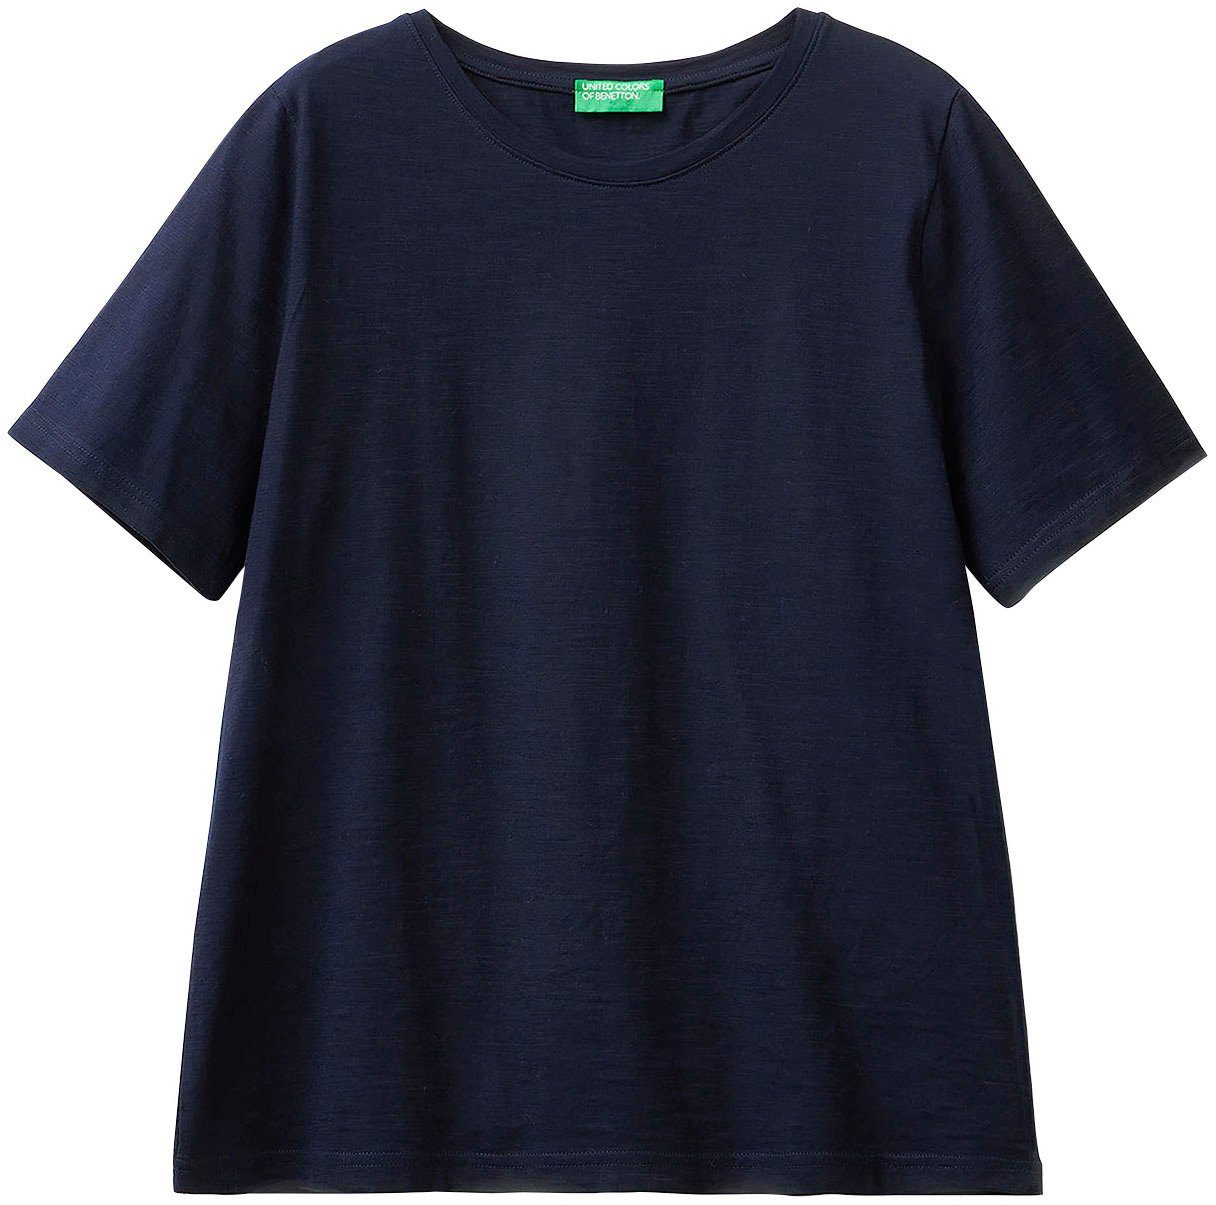 United Colors of Benetton Basic-Optik in marine T-Shirt cleaner